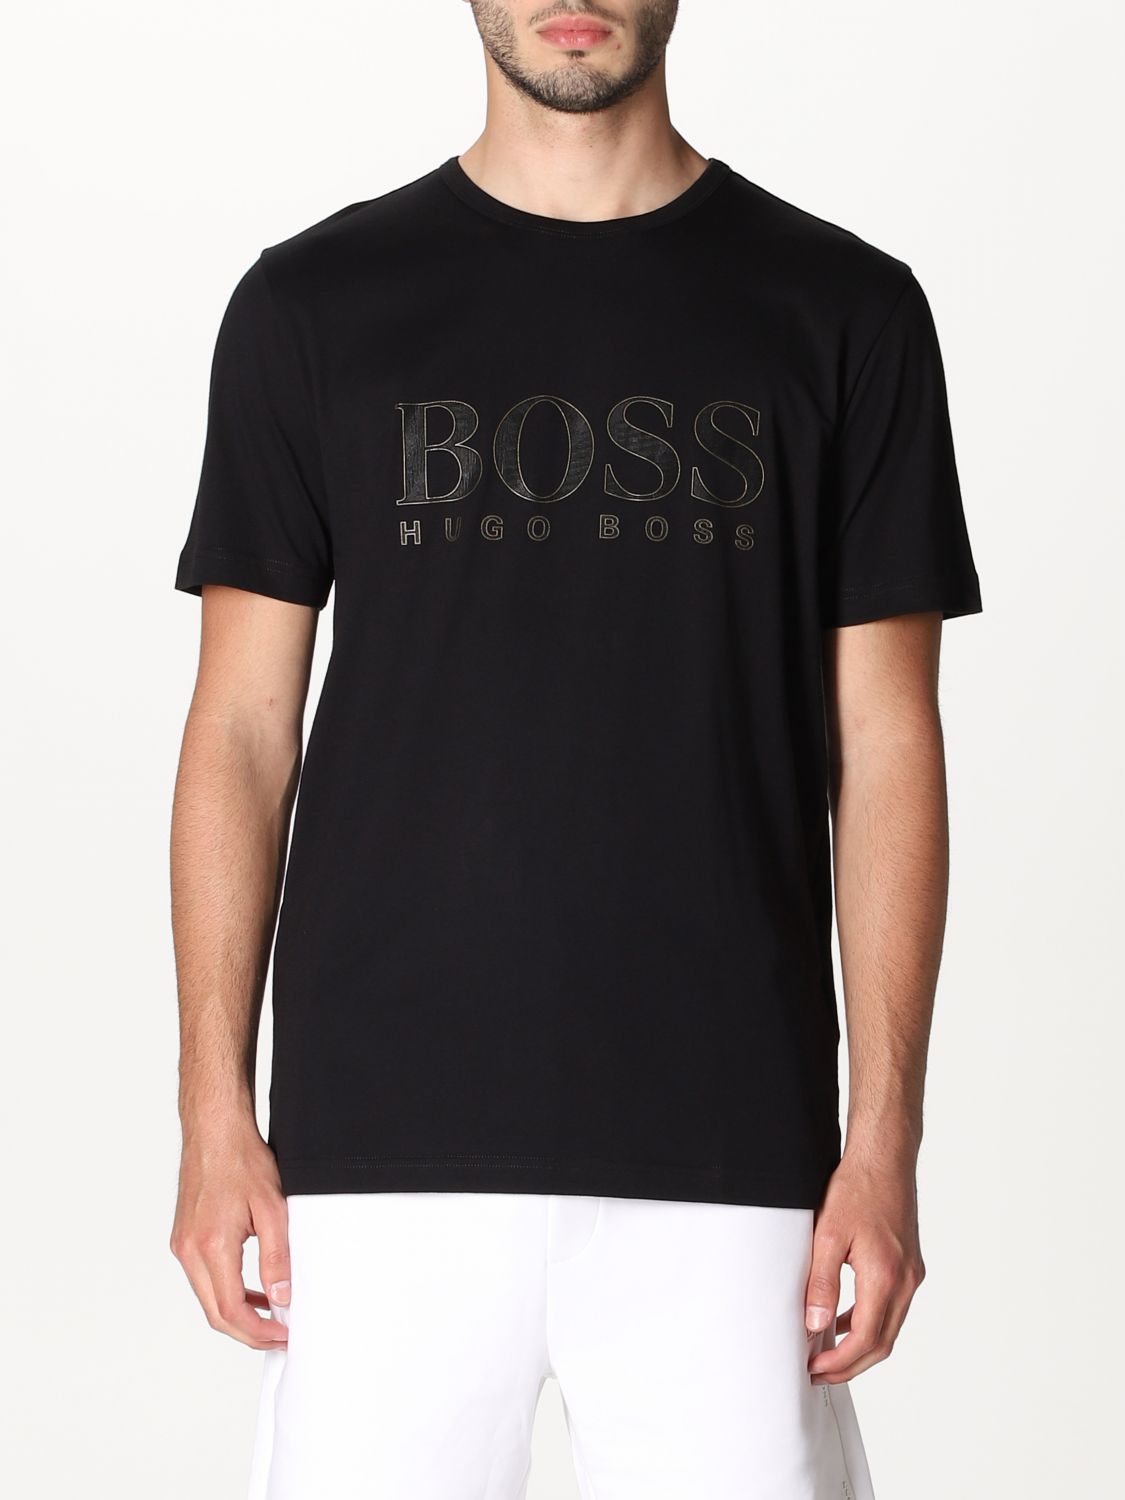 T-shirts Hugo Boss Men black L T-shirt HUGO BOSS 3 Men Clothing Hugo Boss Men T-shirts & Polos Hugo Boss Men T-shirts Hugo Boss Men 